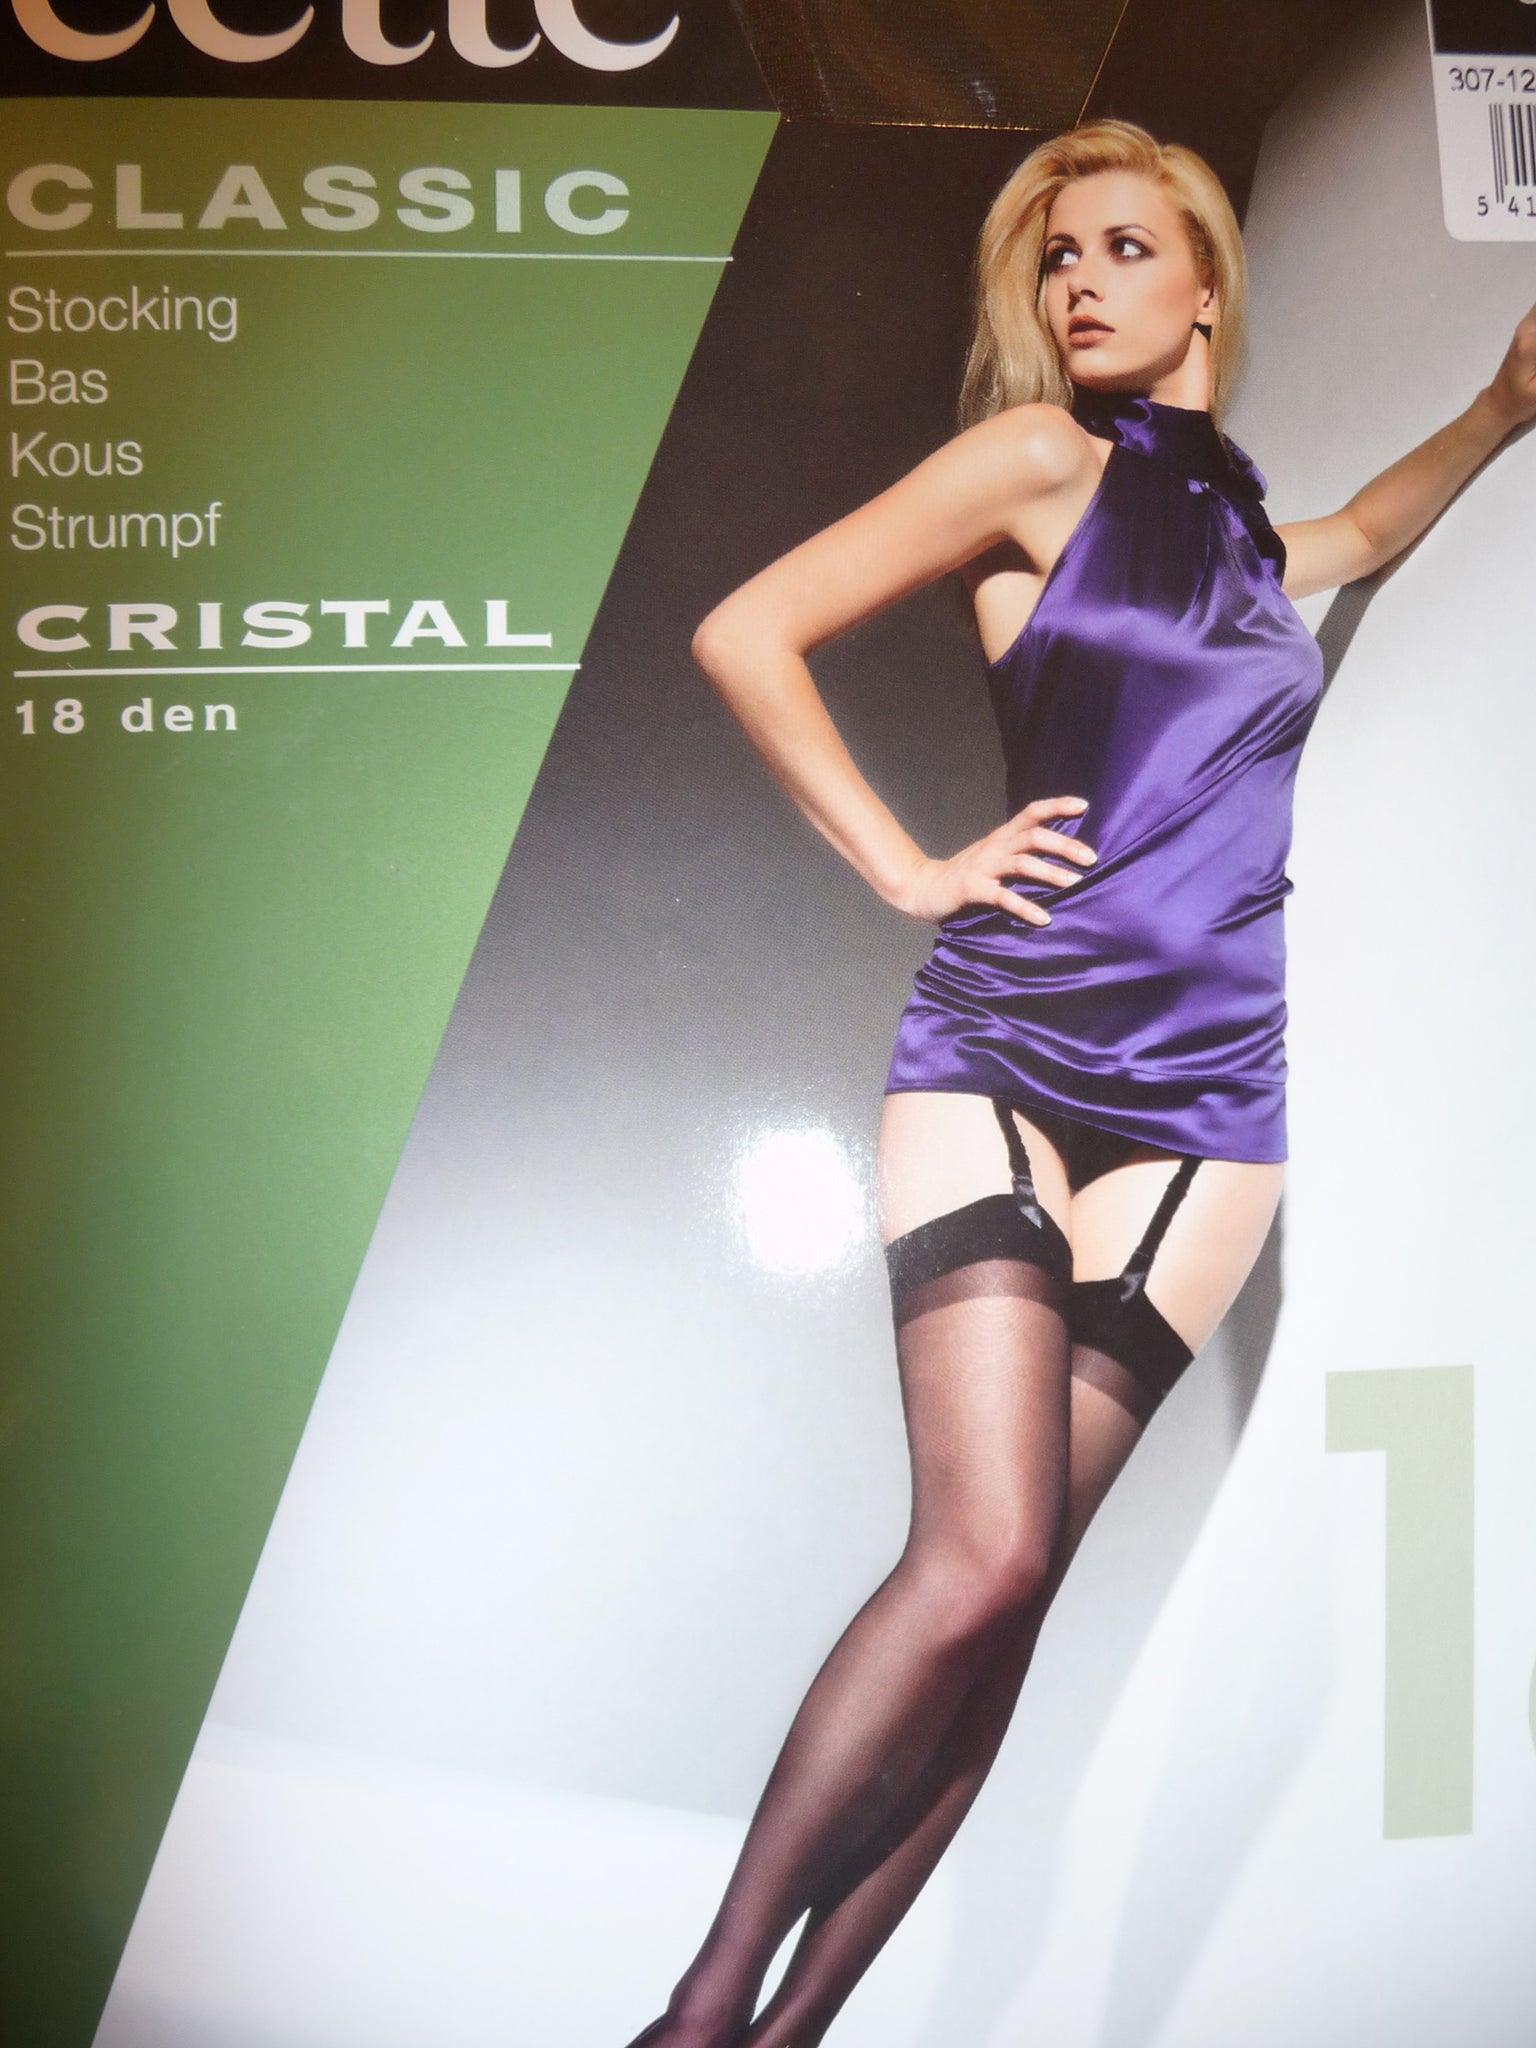 Cette Cristal Stockings